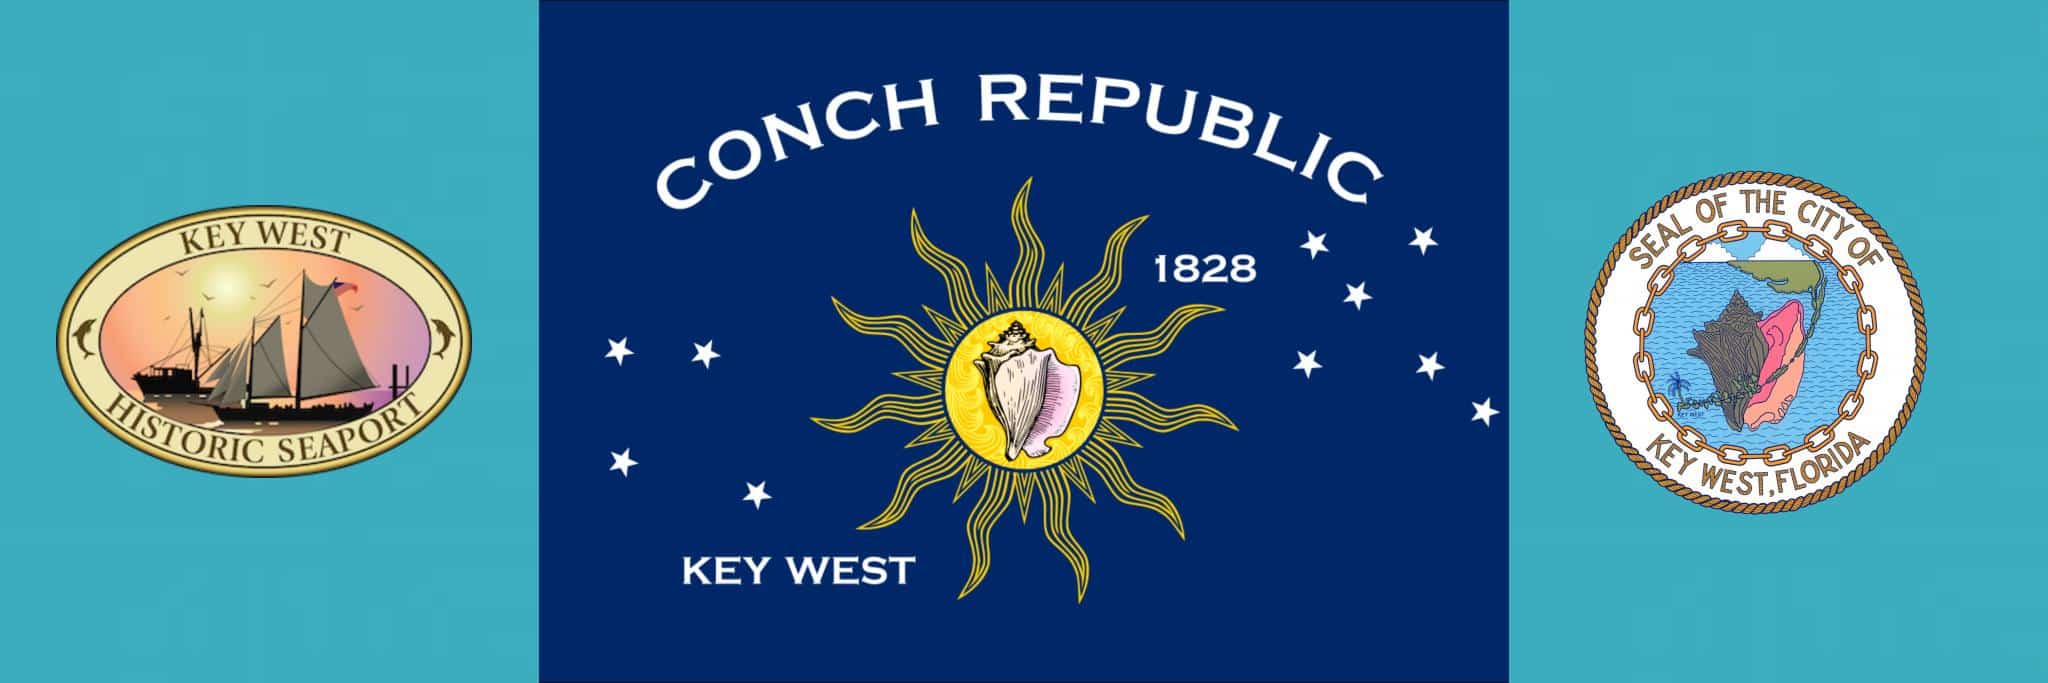 key west historic seaport conch republic